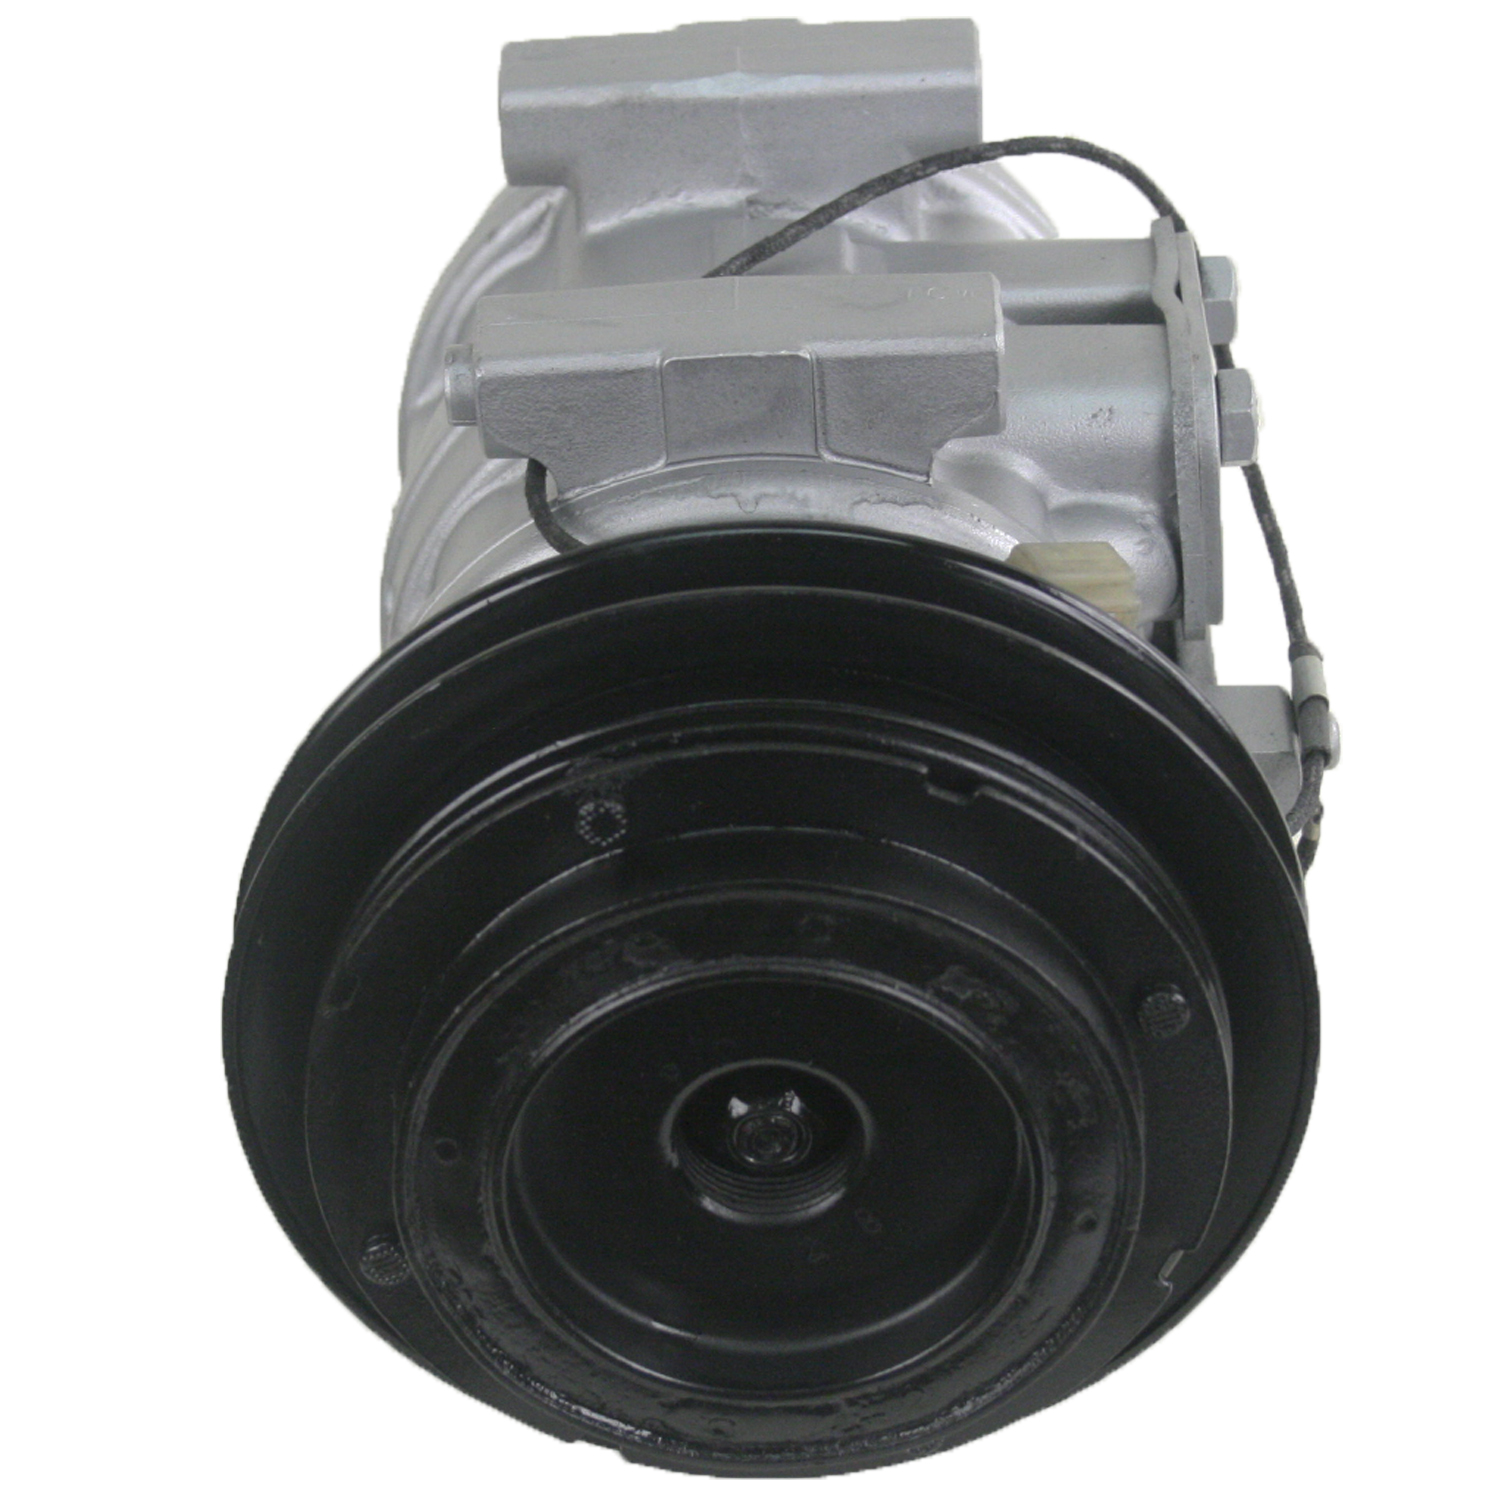 TCW Compressor 31050.101 Remanufactured Product Image field_60b6a13a6e67c